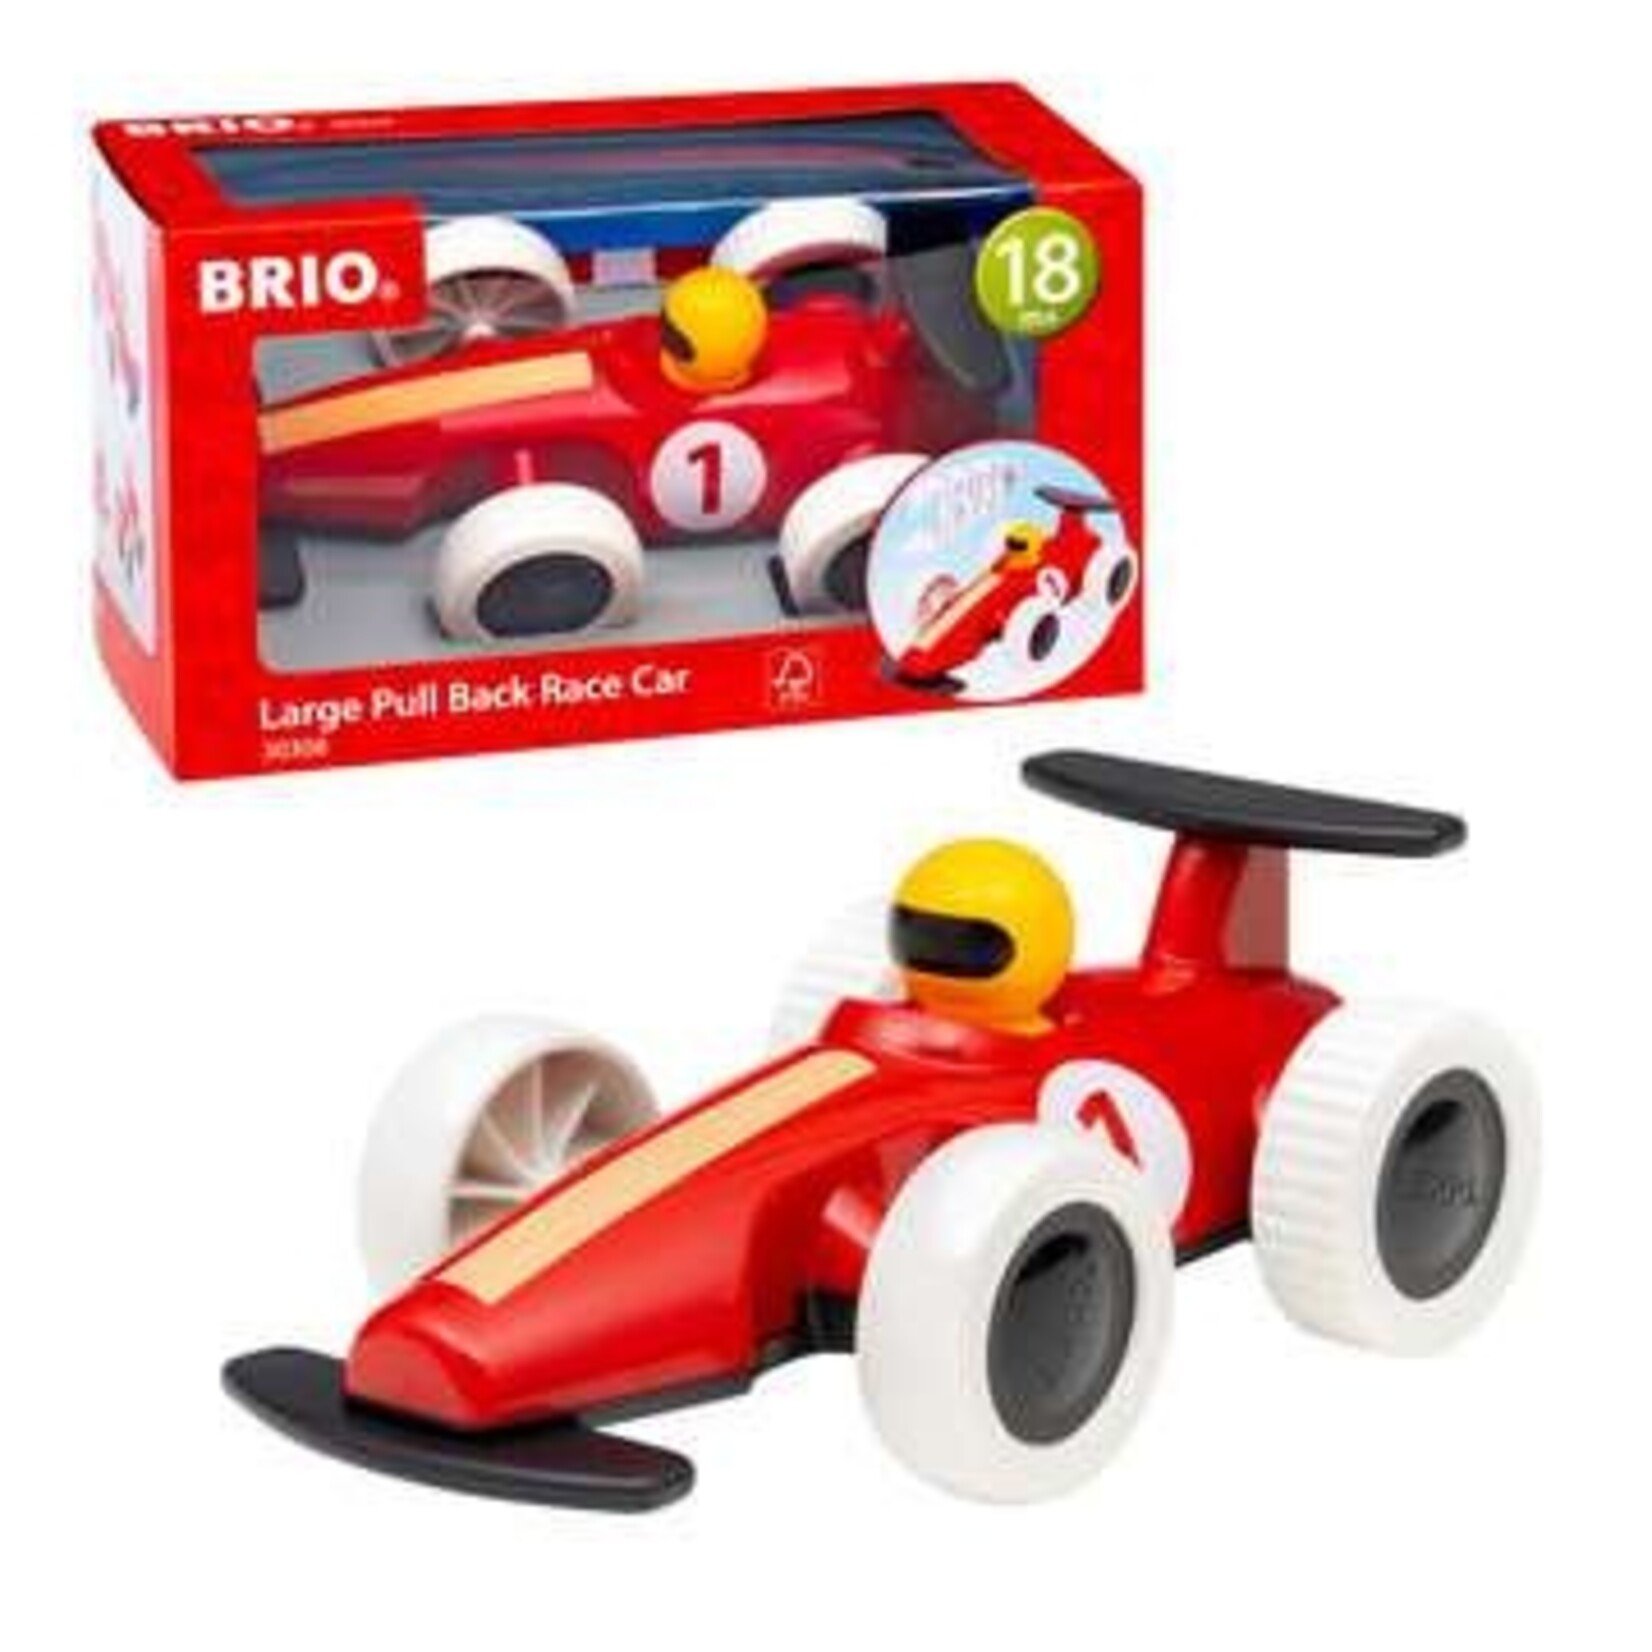 BRIO Pull Back Race Car